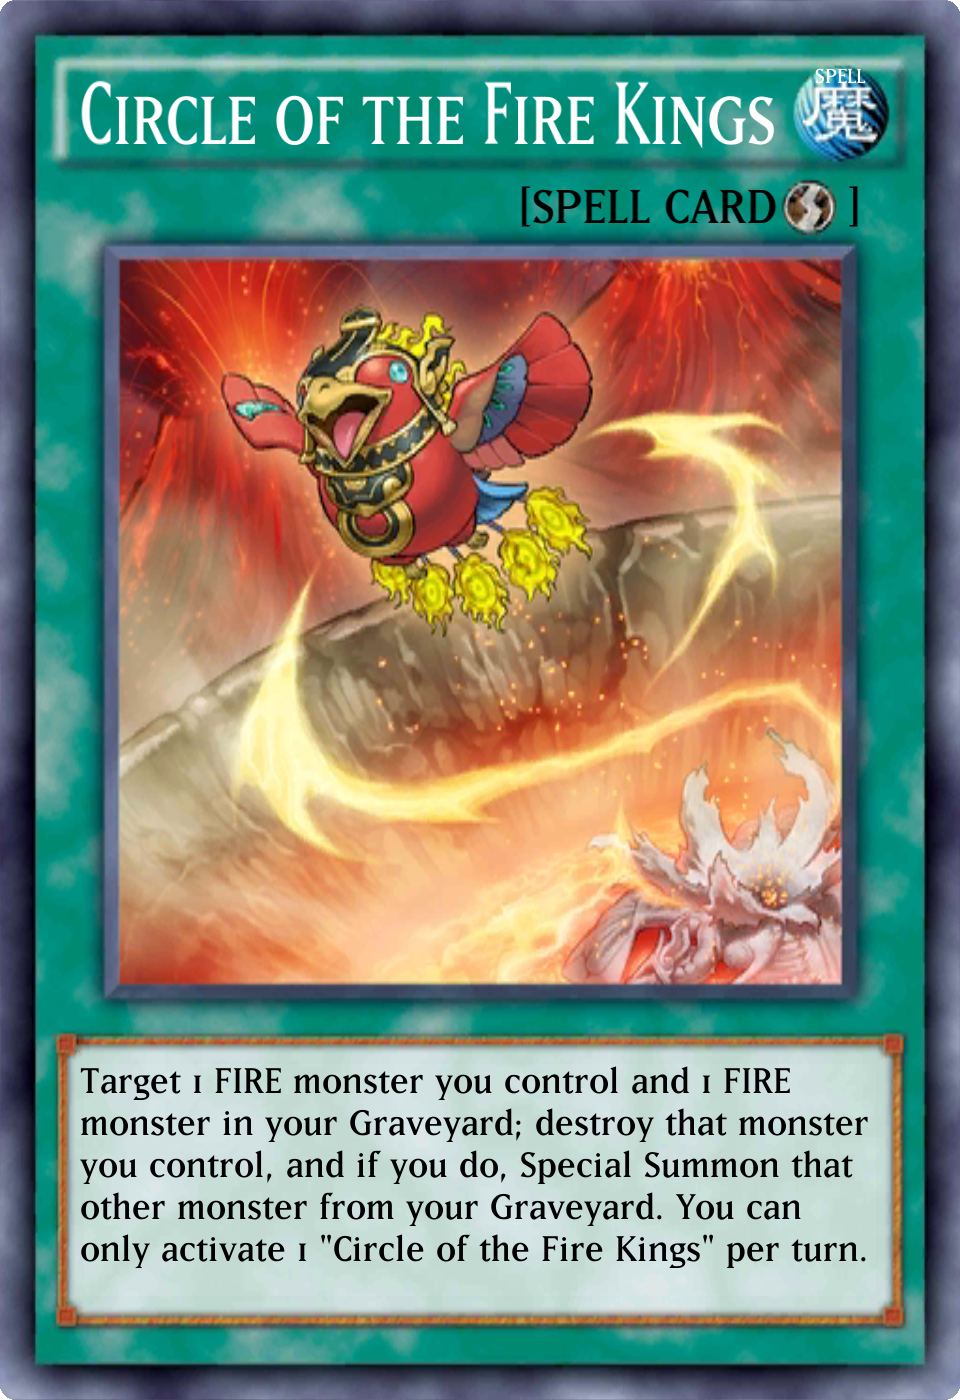 Fire King, Yu-Gi-Oh! Wiki